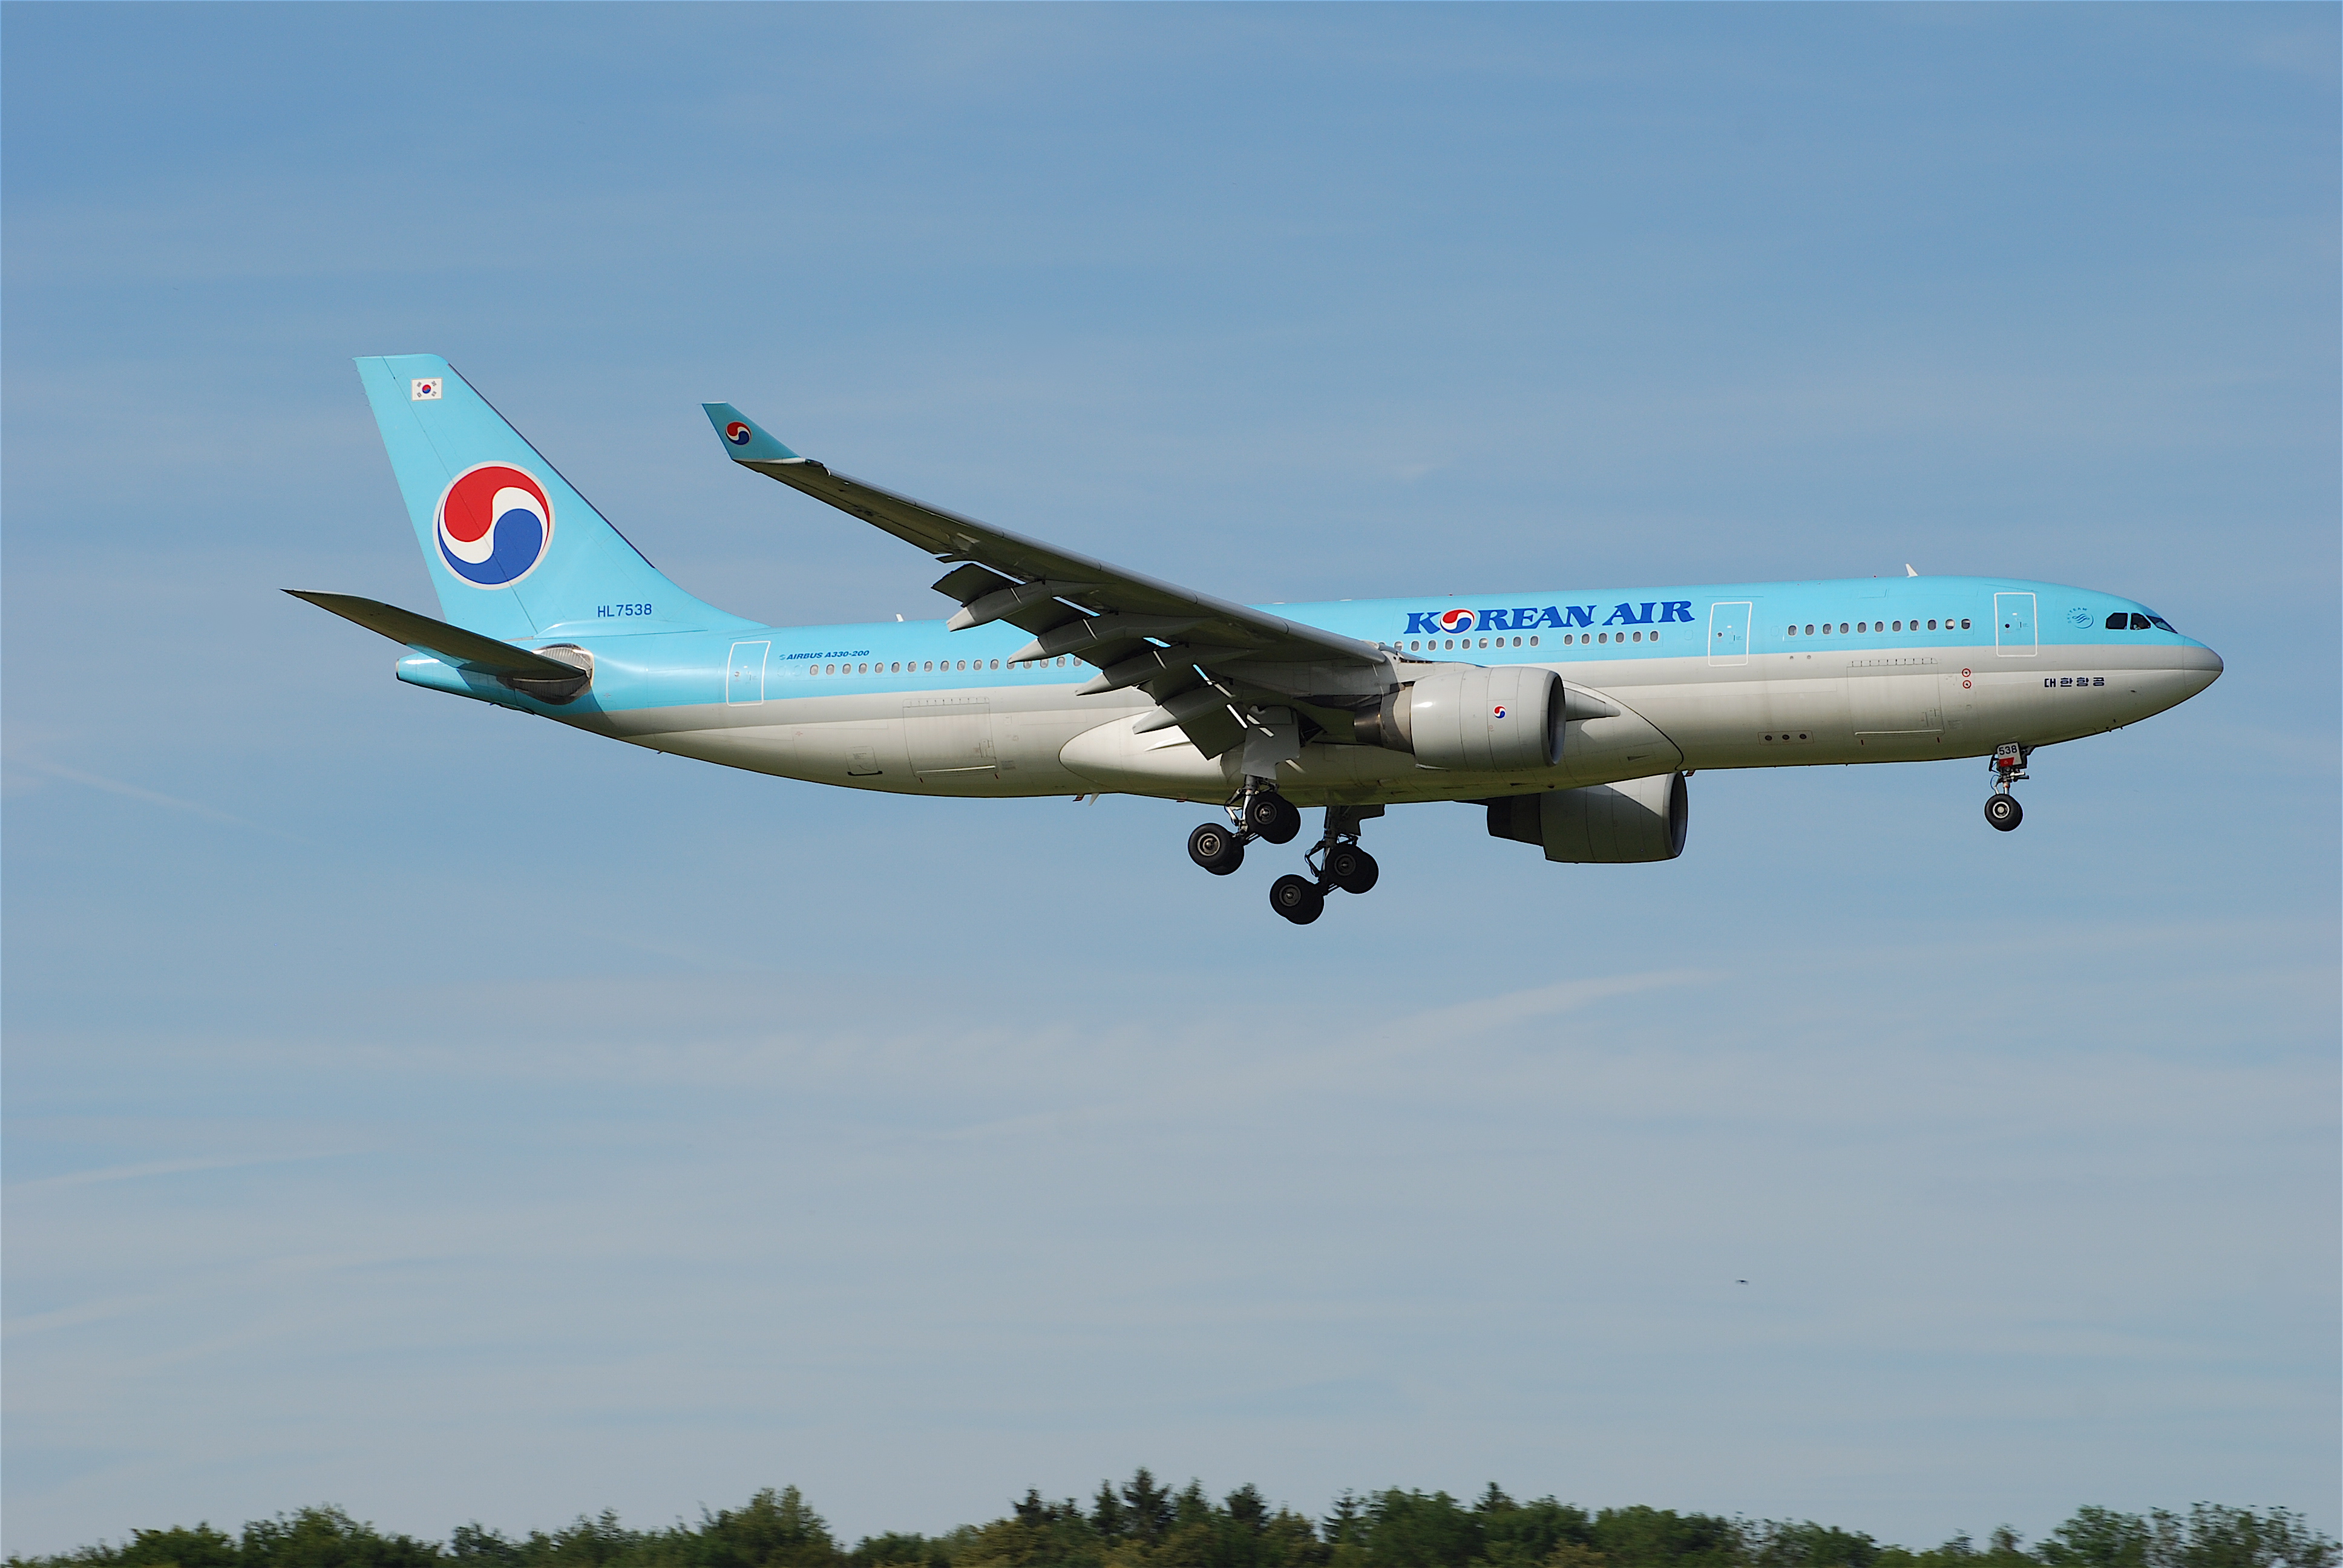 Korean Air Airbus A330-200, HL7538@ZRH,30.06.2007-473be - Flickr - Aero Icarus